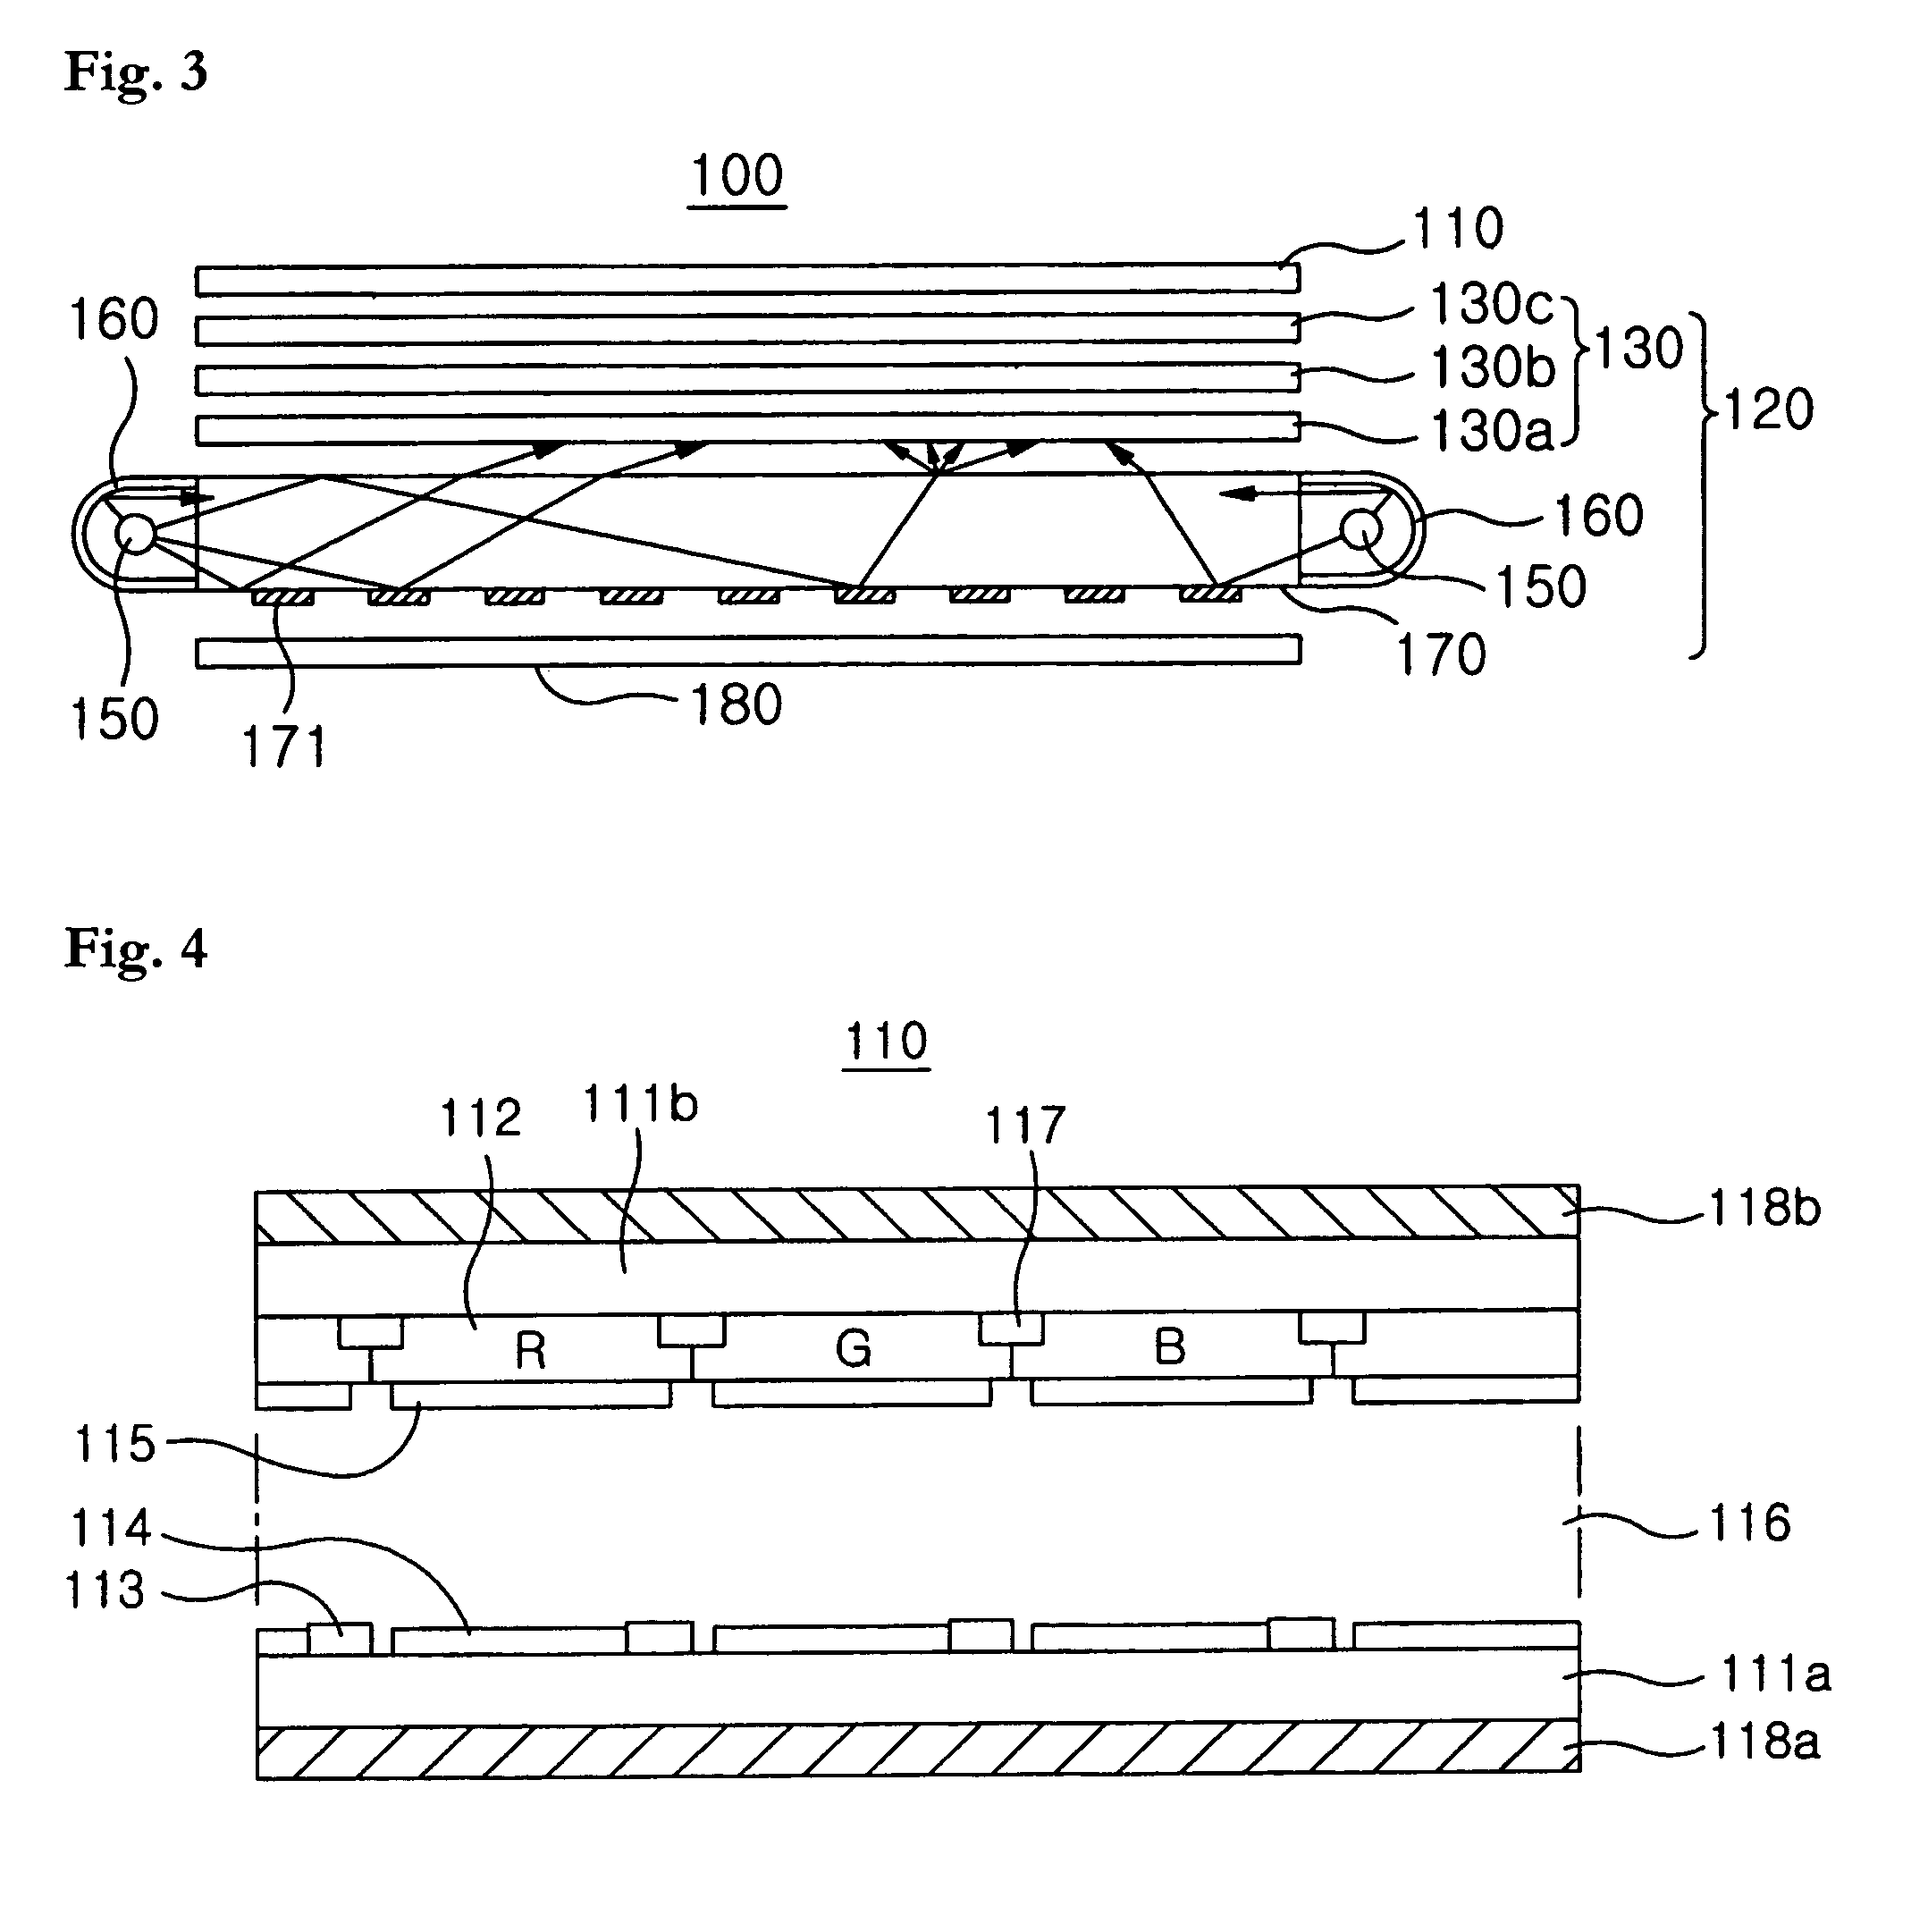 Prism sheet, backlight unit and liquid crystal display